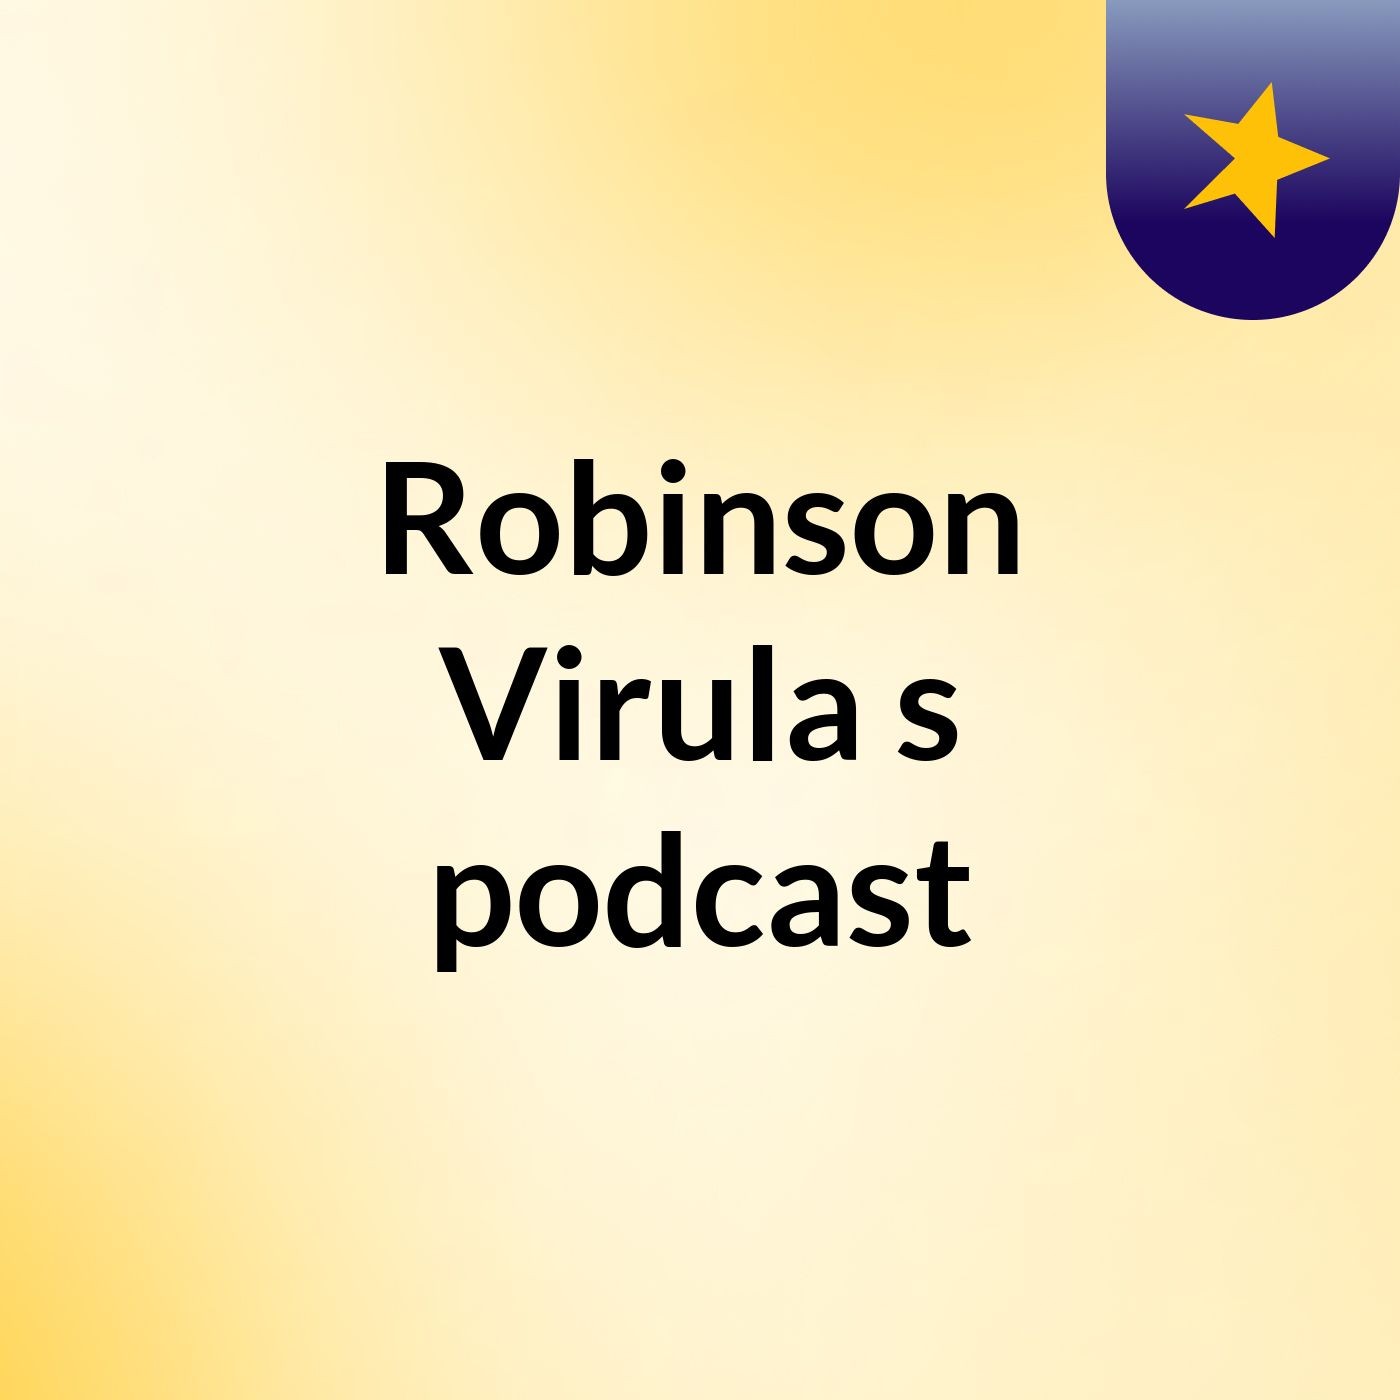 Robinson Virula's podcast